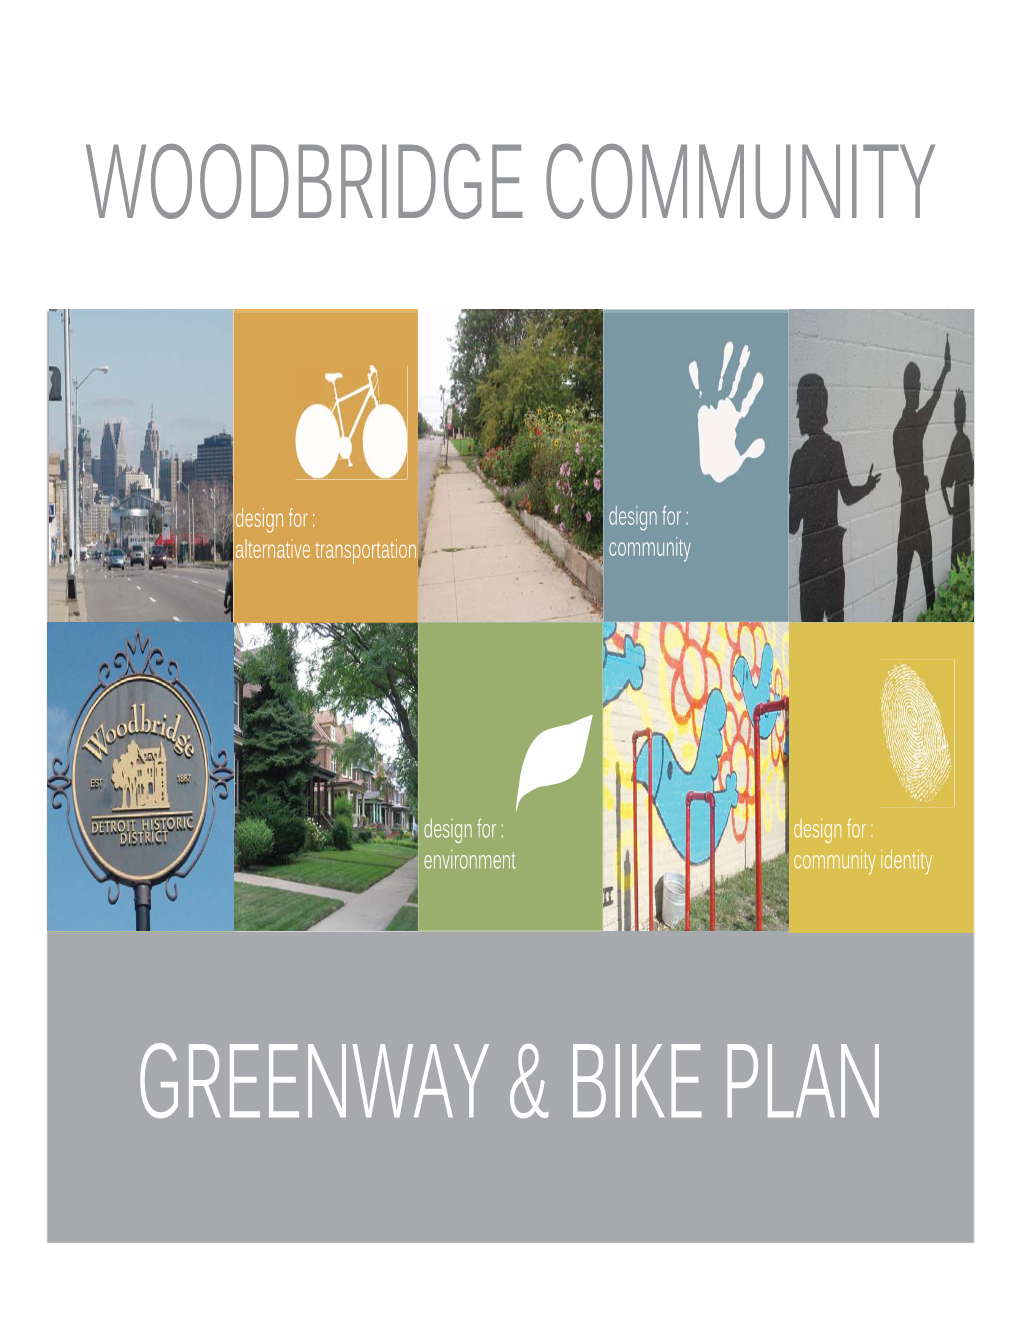 Detroit's Woodbridge Community Greenway and Bike Plan